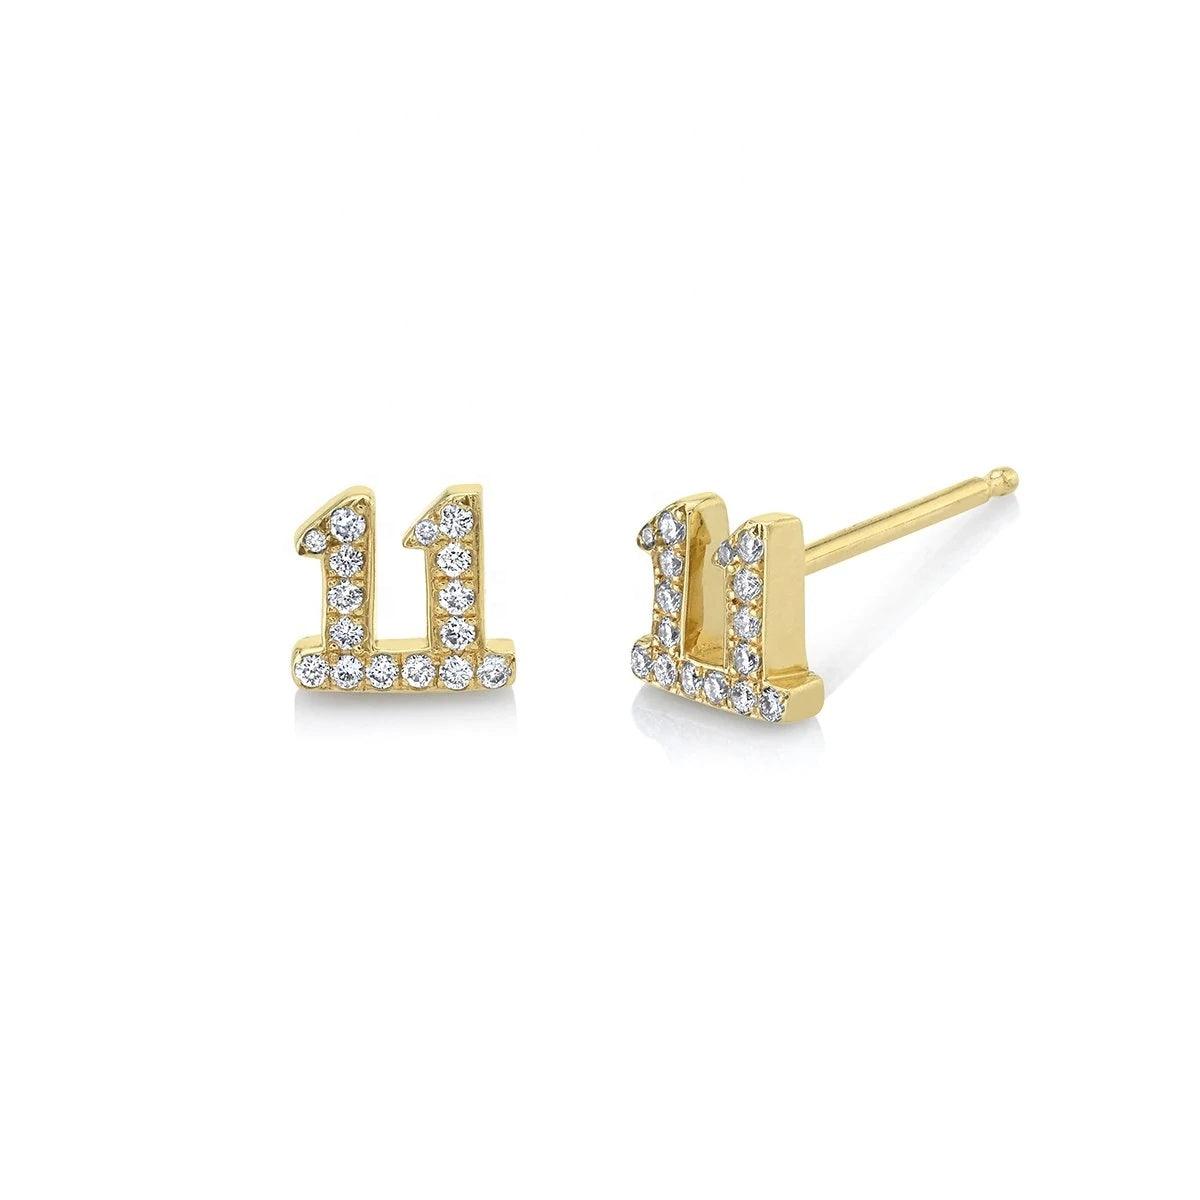 Laila 11:11 Stud Earrings | 18K Gold Plated - Luna Charles | 11:11, angel numbers, Earrings, everyday, gemstone, gold, Jewellery, sparkle, studs | 